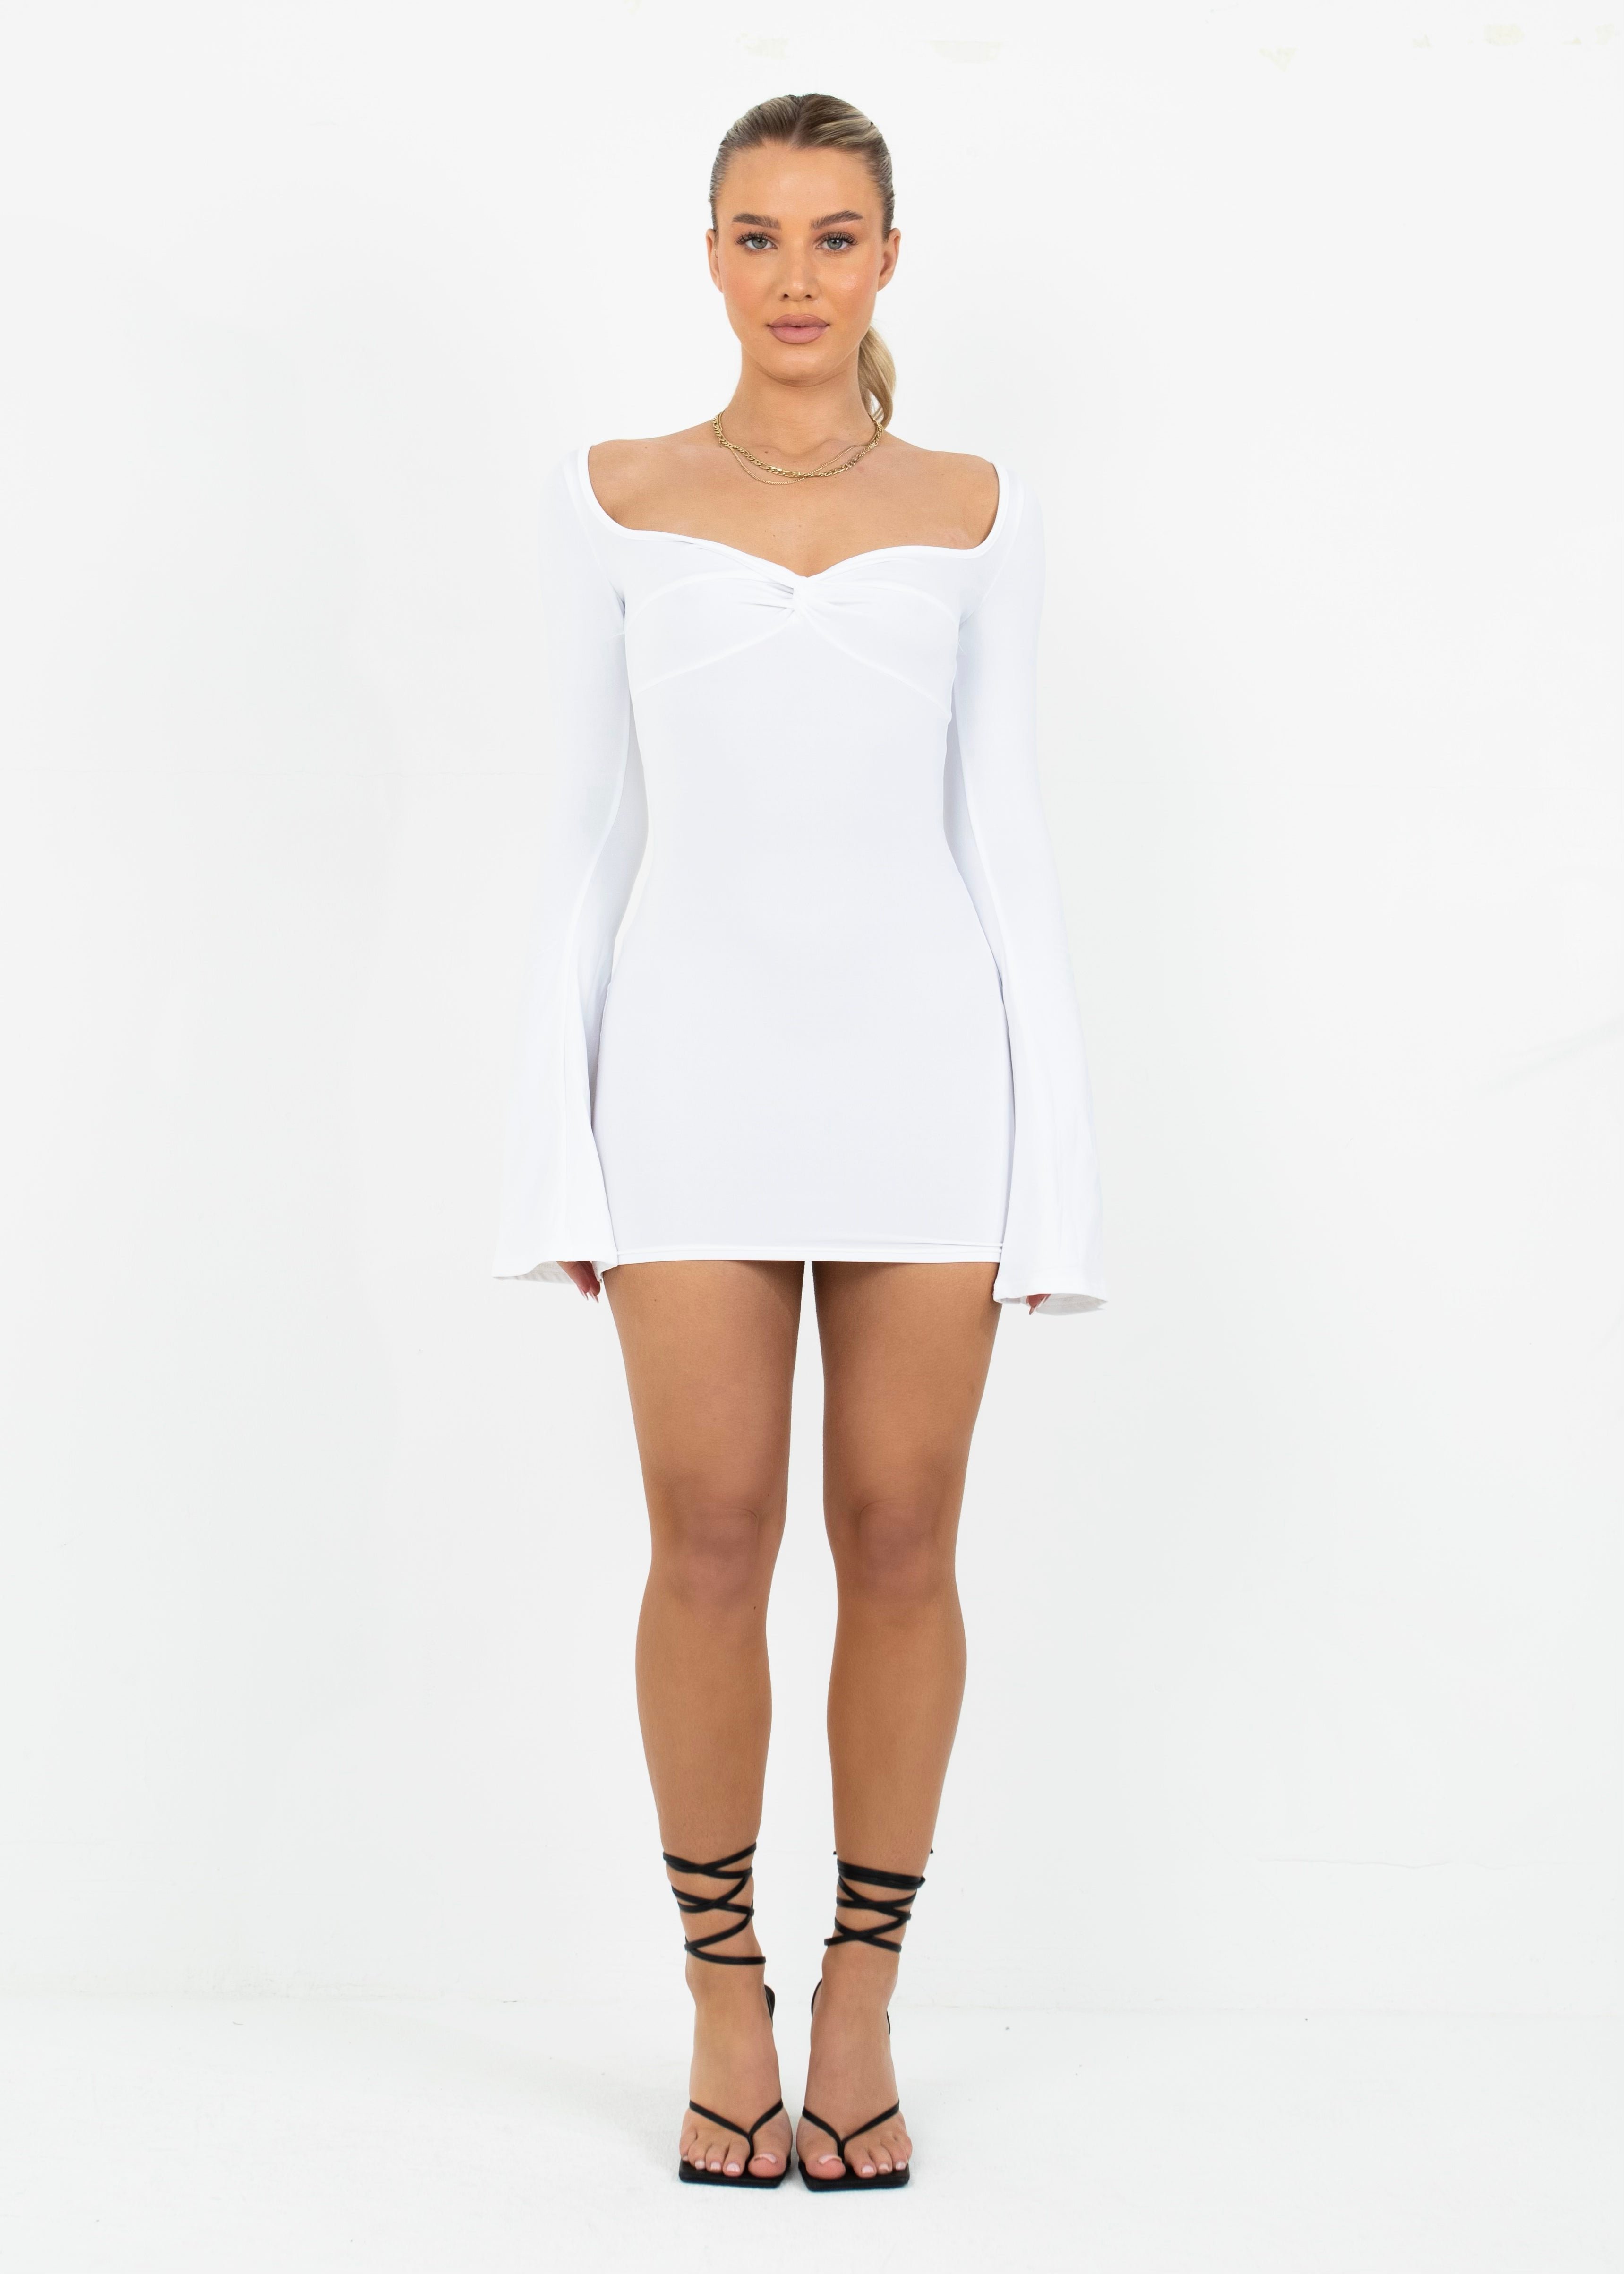 SAVANNAH - White Knot Mini Dress